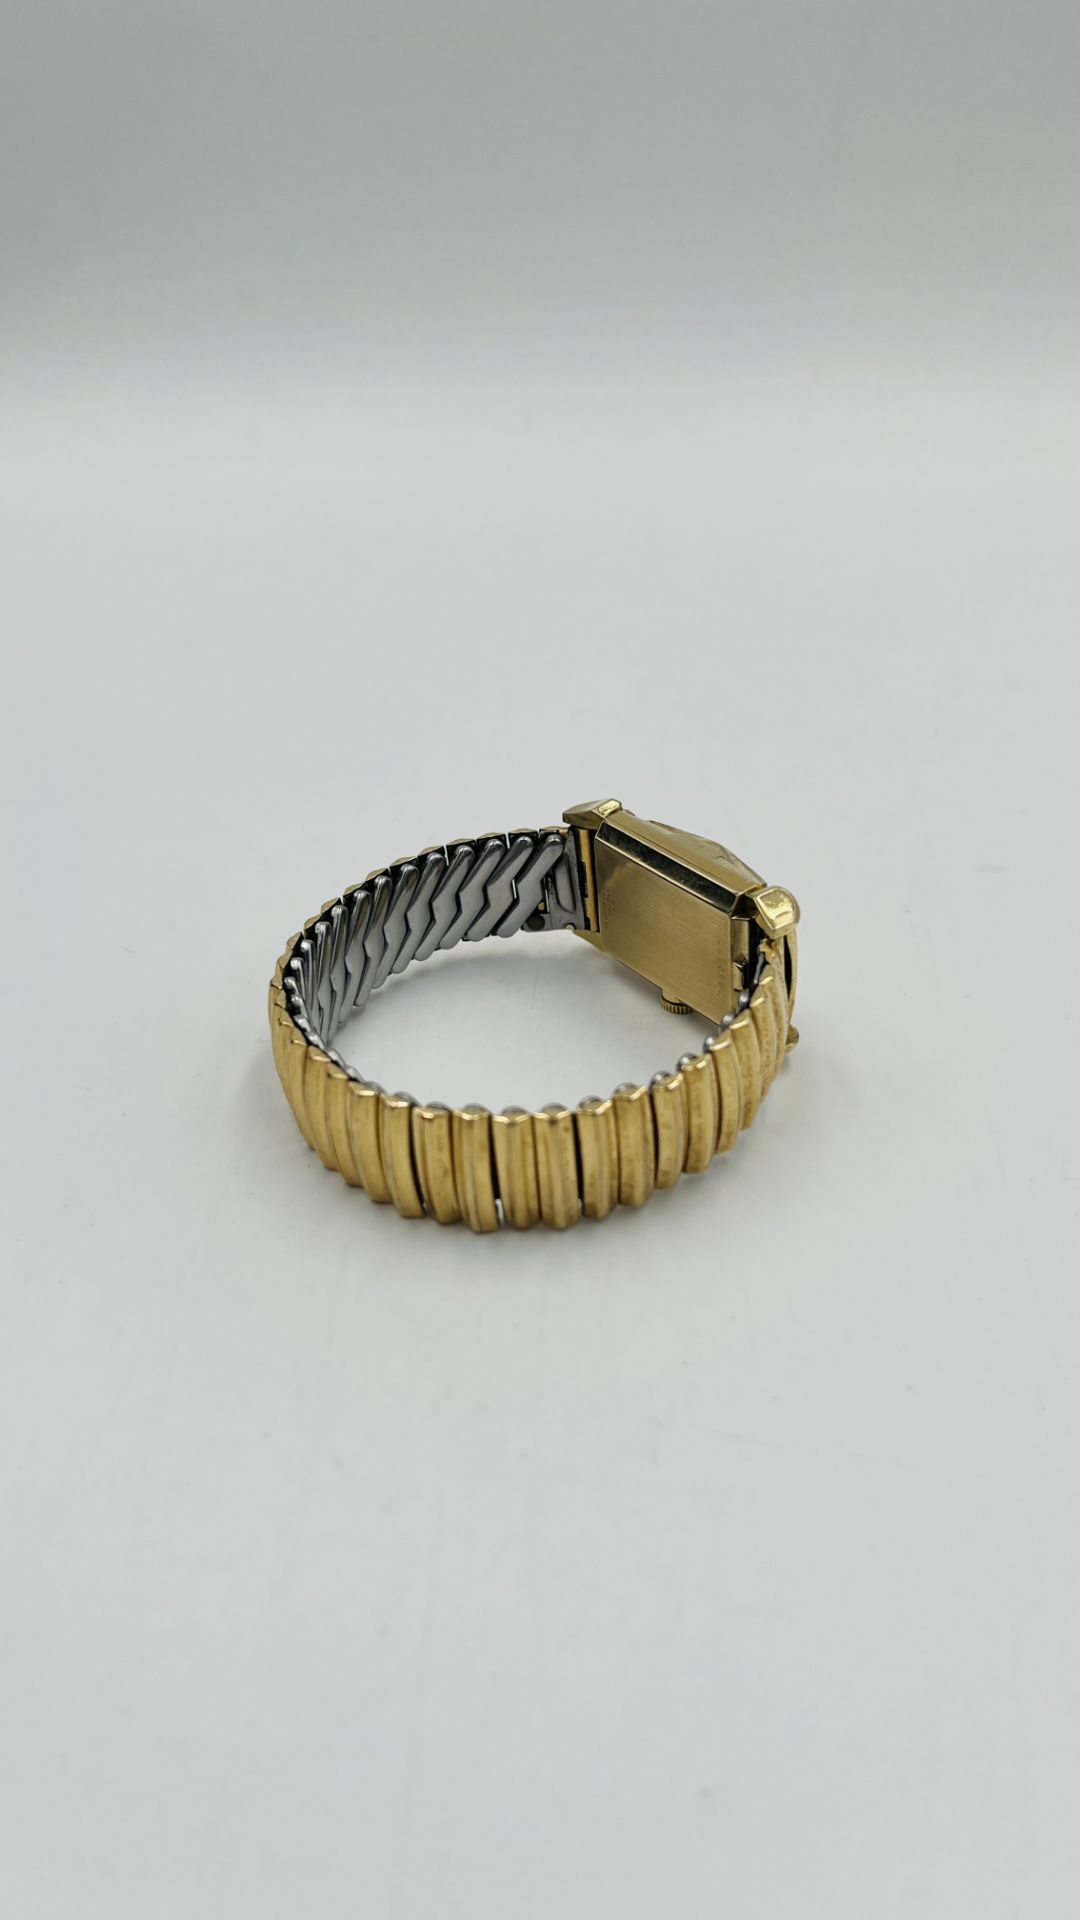 Bulova "tank" style 10k rolled gold cased manual wind wrist watch - Image 6 of 7